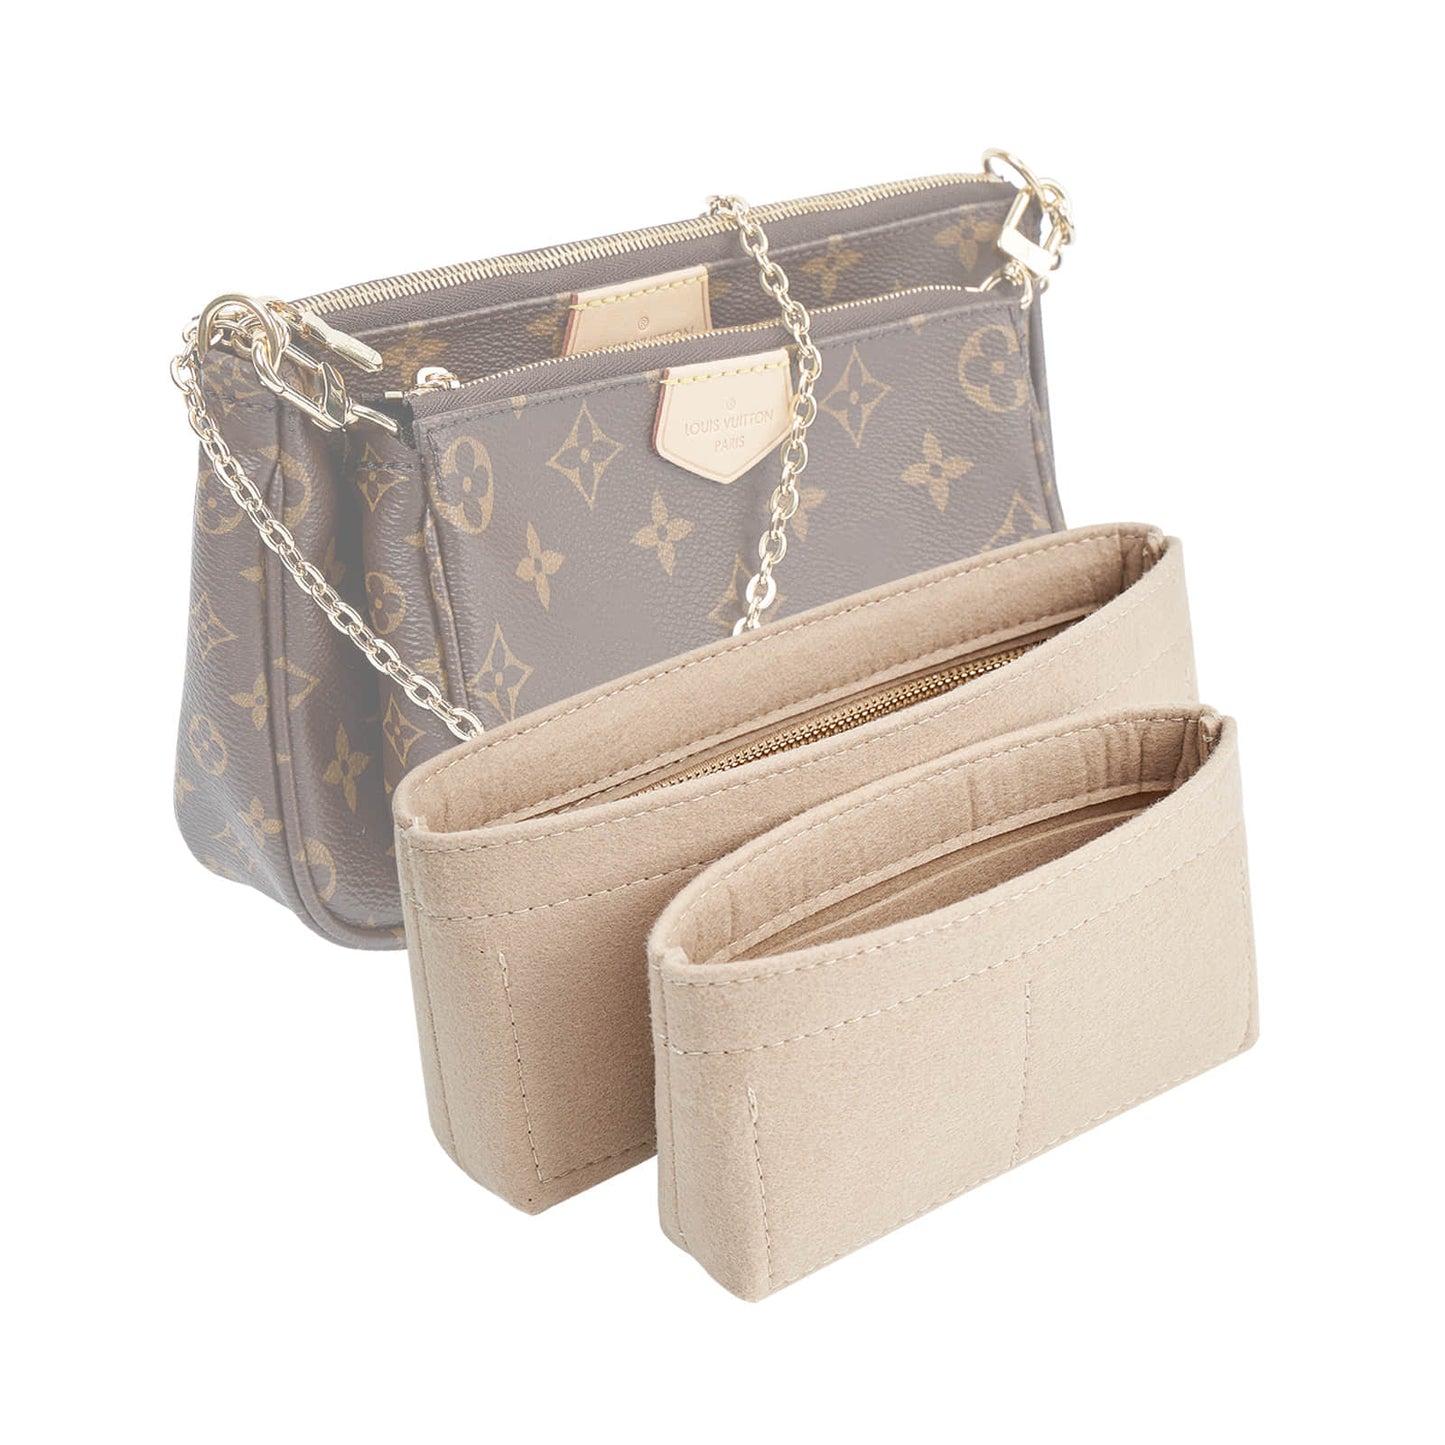 Felt Purse Organizer Insert Pochette Handbag Insert Bag in Bag for Multi Pochette Accessories Add Zipper Pocket